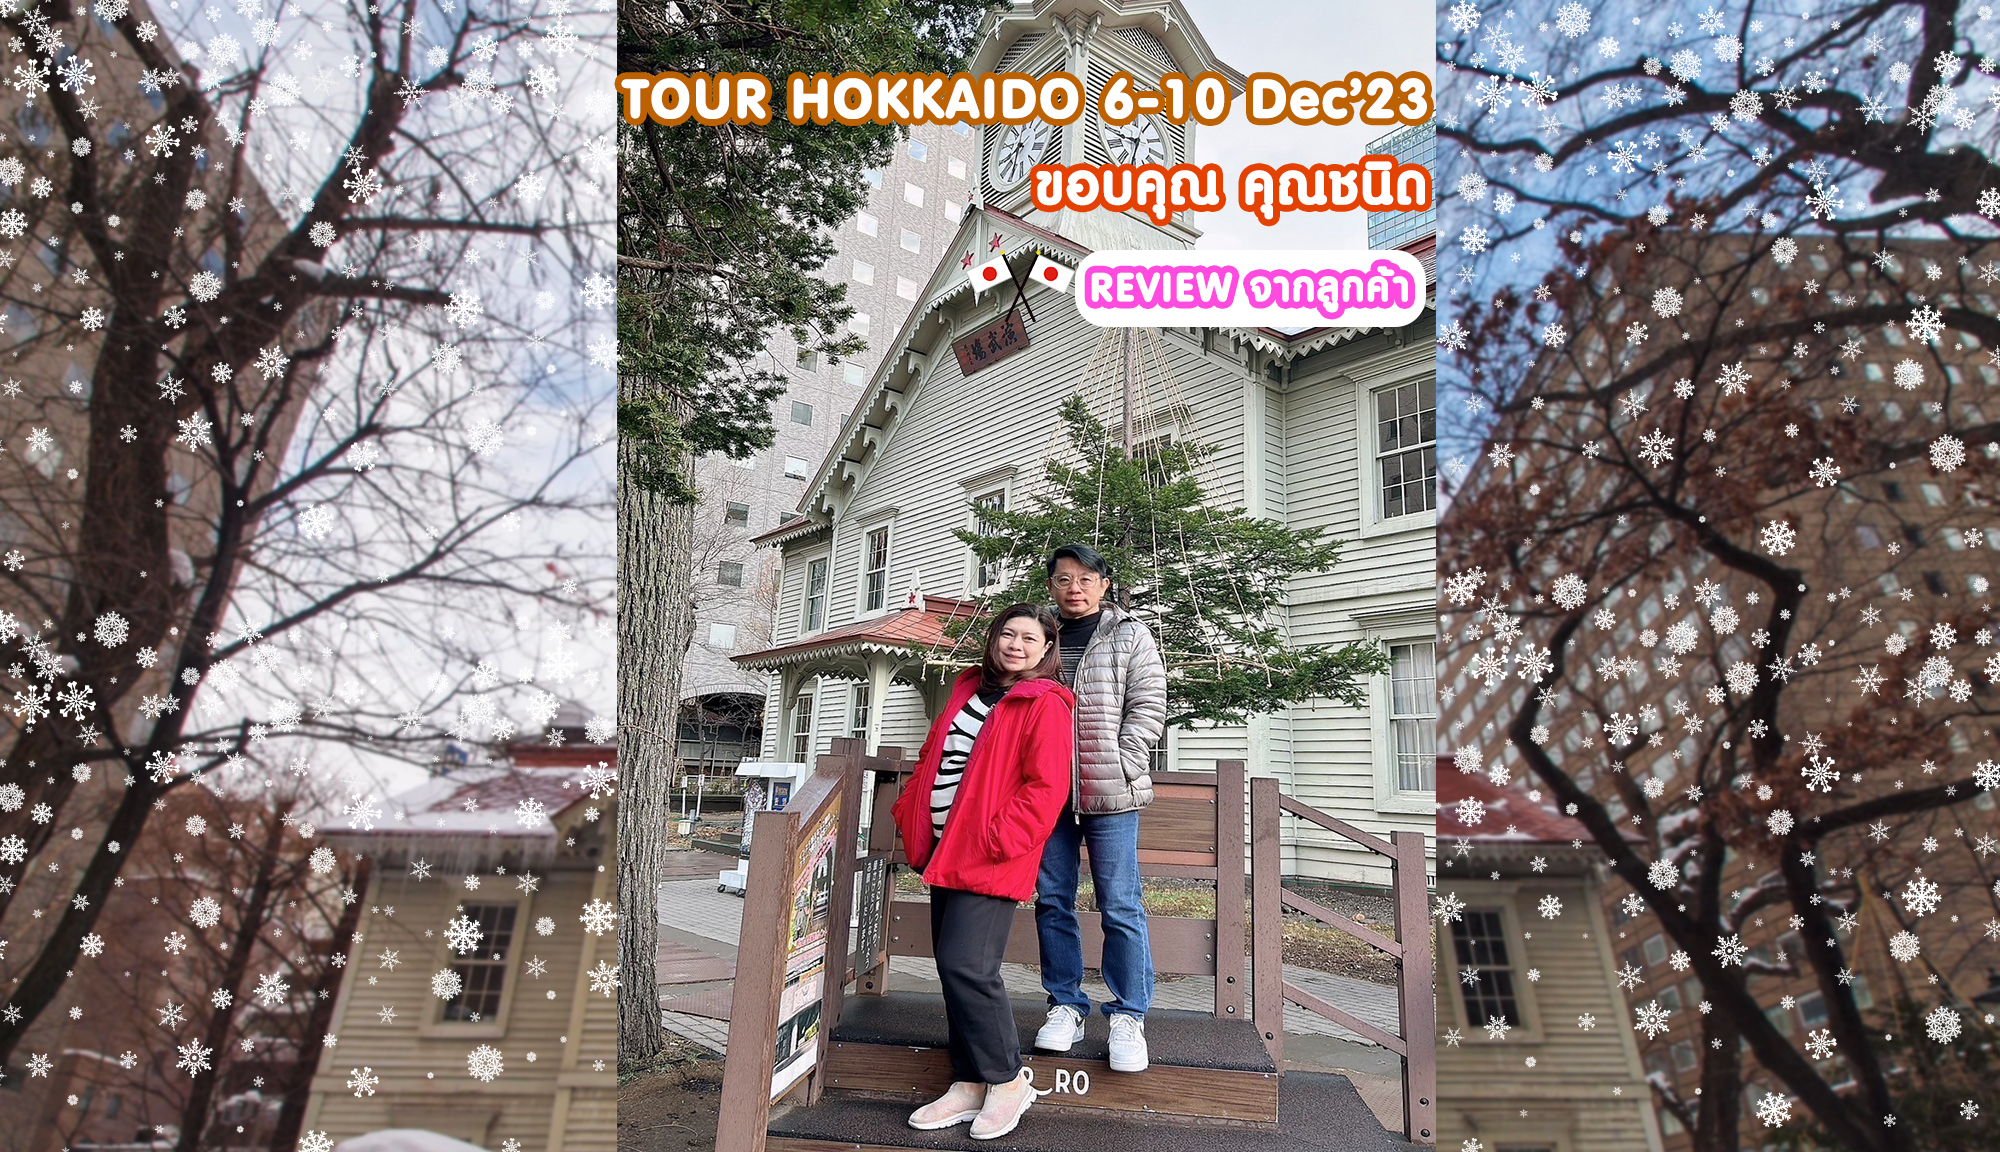 Review ขอบคุณ คุณชนิดา​ TOUR HOKKAIDO 6-10 Dec’23